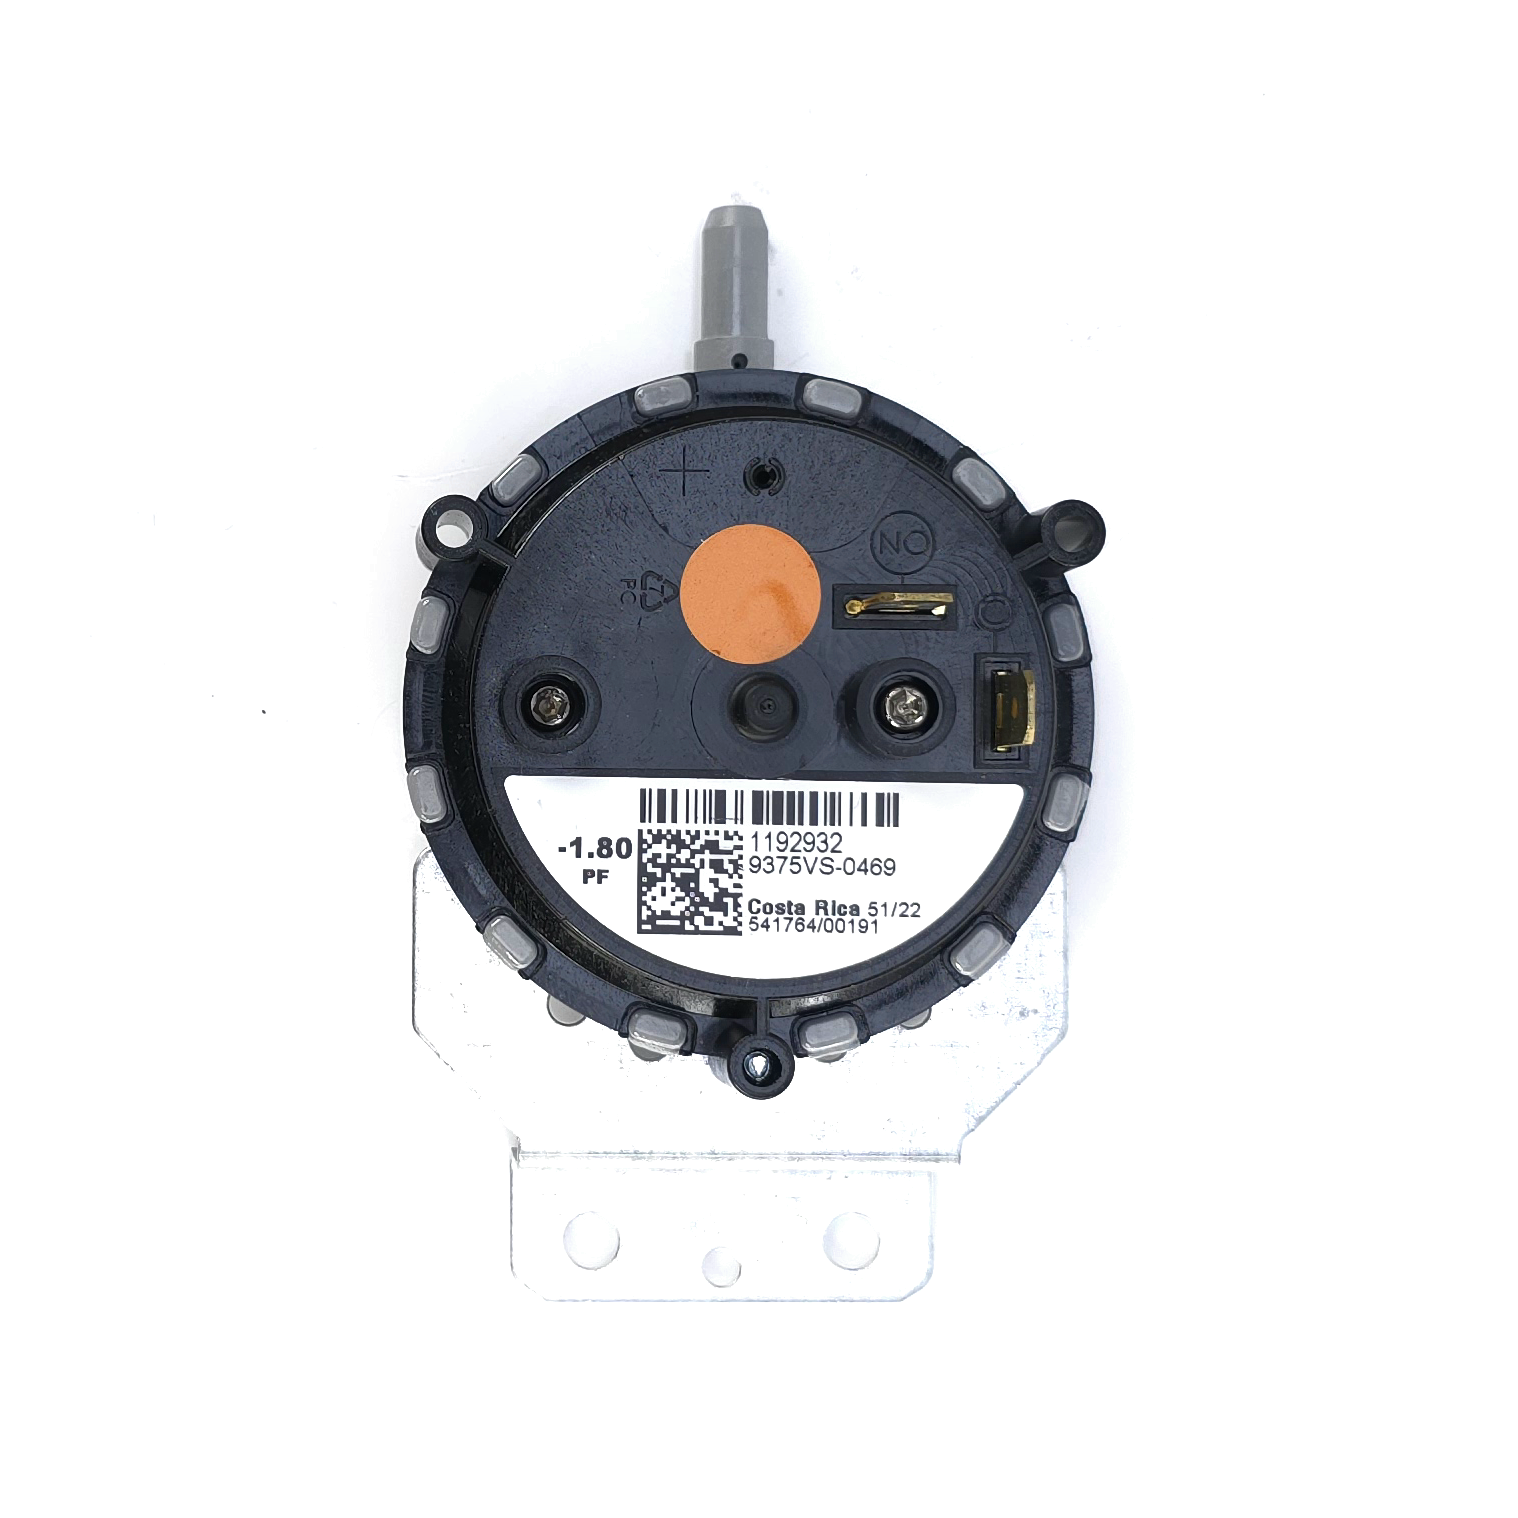 ICP 1192932 Furnace Pressure Switch 1.80 WC